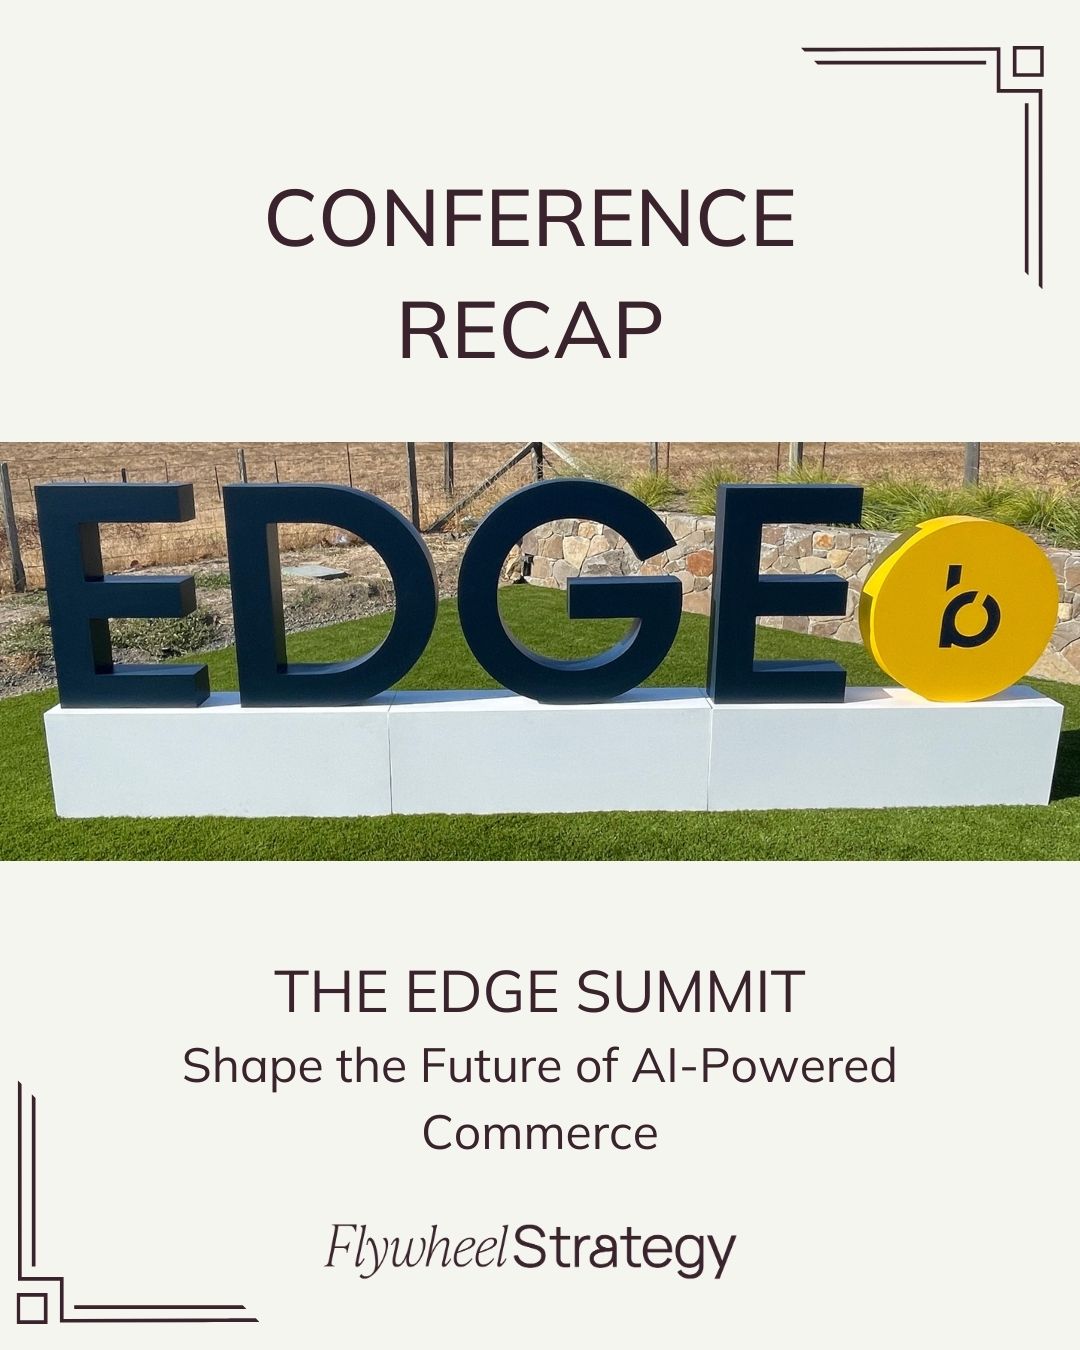 The Edge Summit. Conference Recap. Flywheel Strategy.